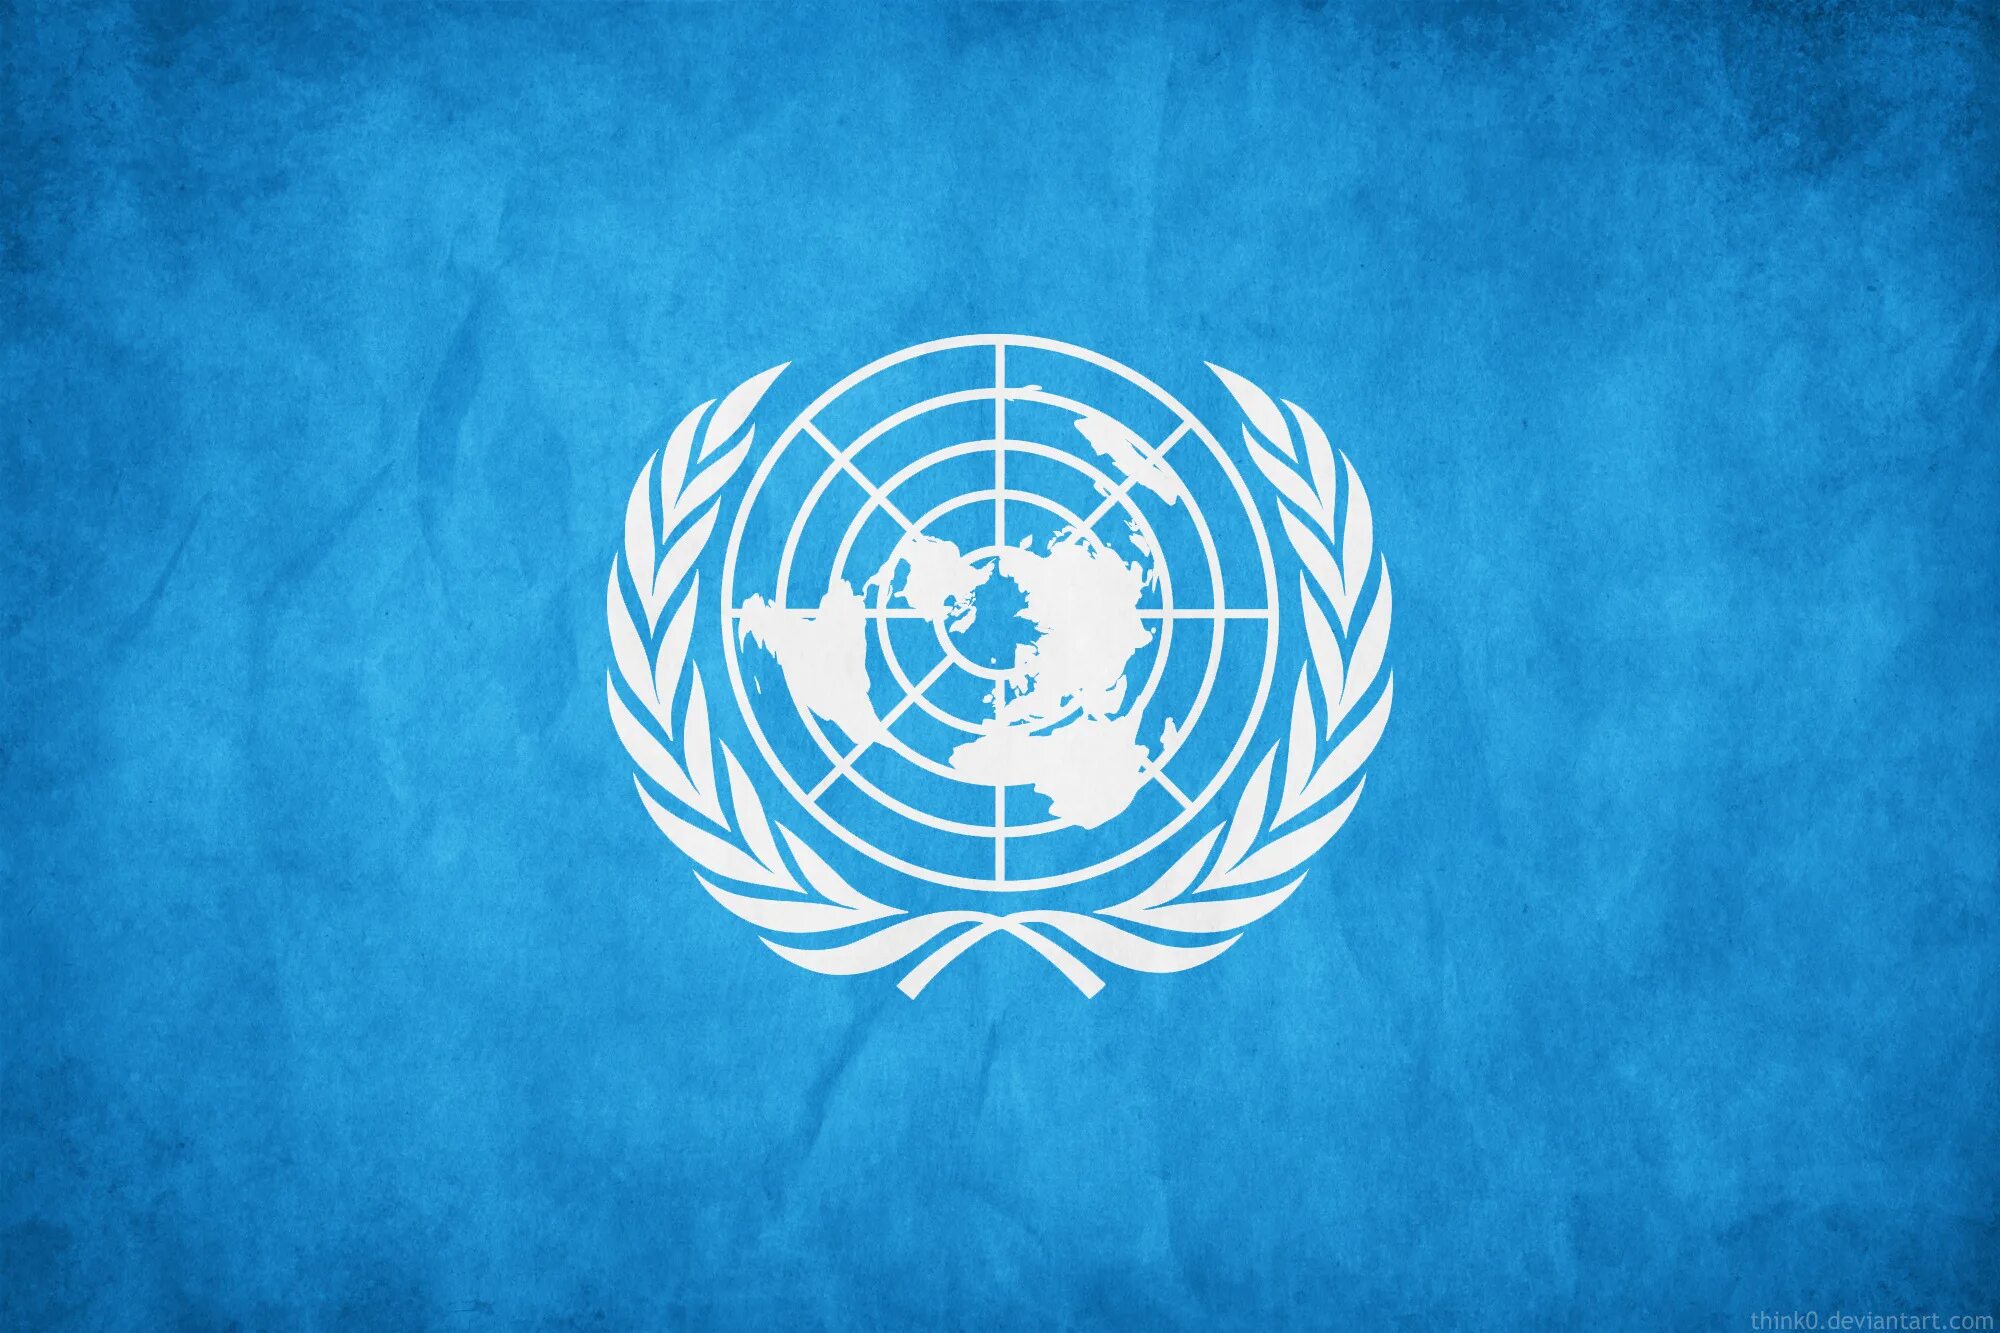 Оон запись. Флаг миротворческих сил ООН. Организация Объединенных наций (ООН). Флаг организации Объединенных наций. Организация Объединенных наций ООН флаг.